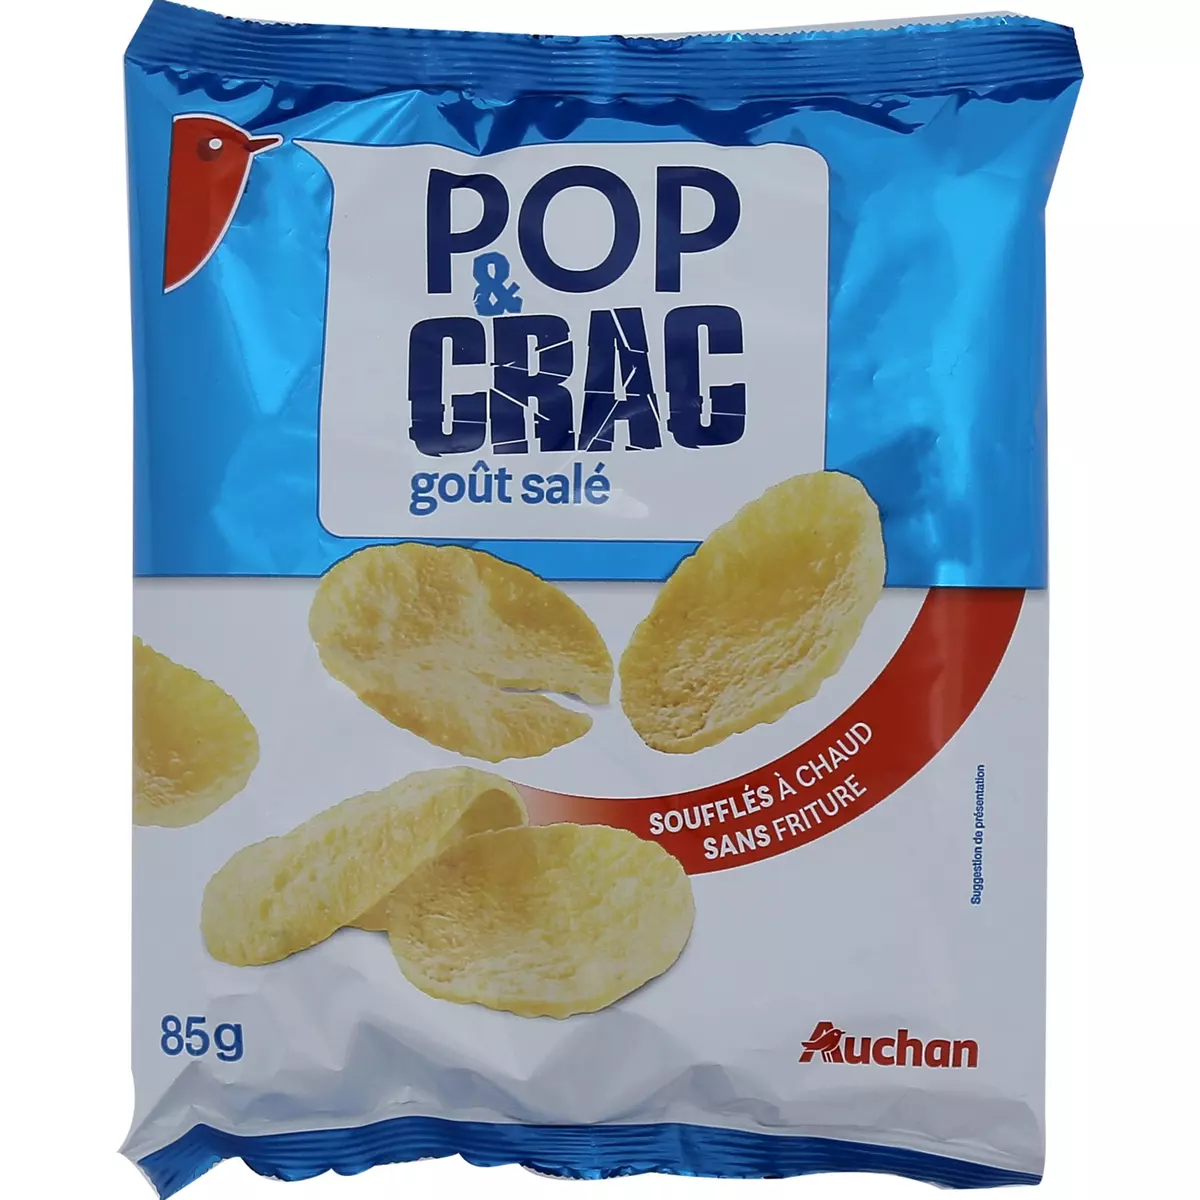 AUCHAN Pop & Crac soufflés à chaud sans friture goût salé 85g